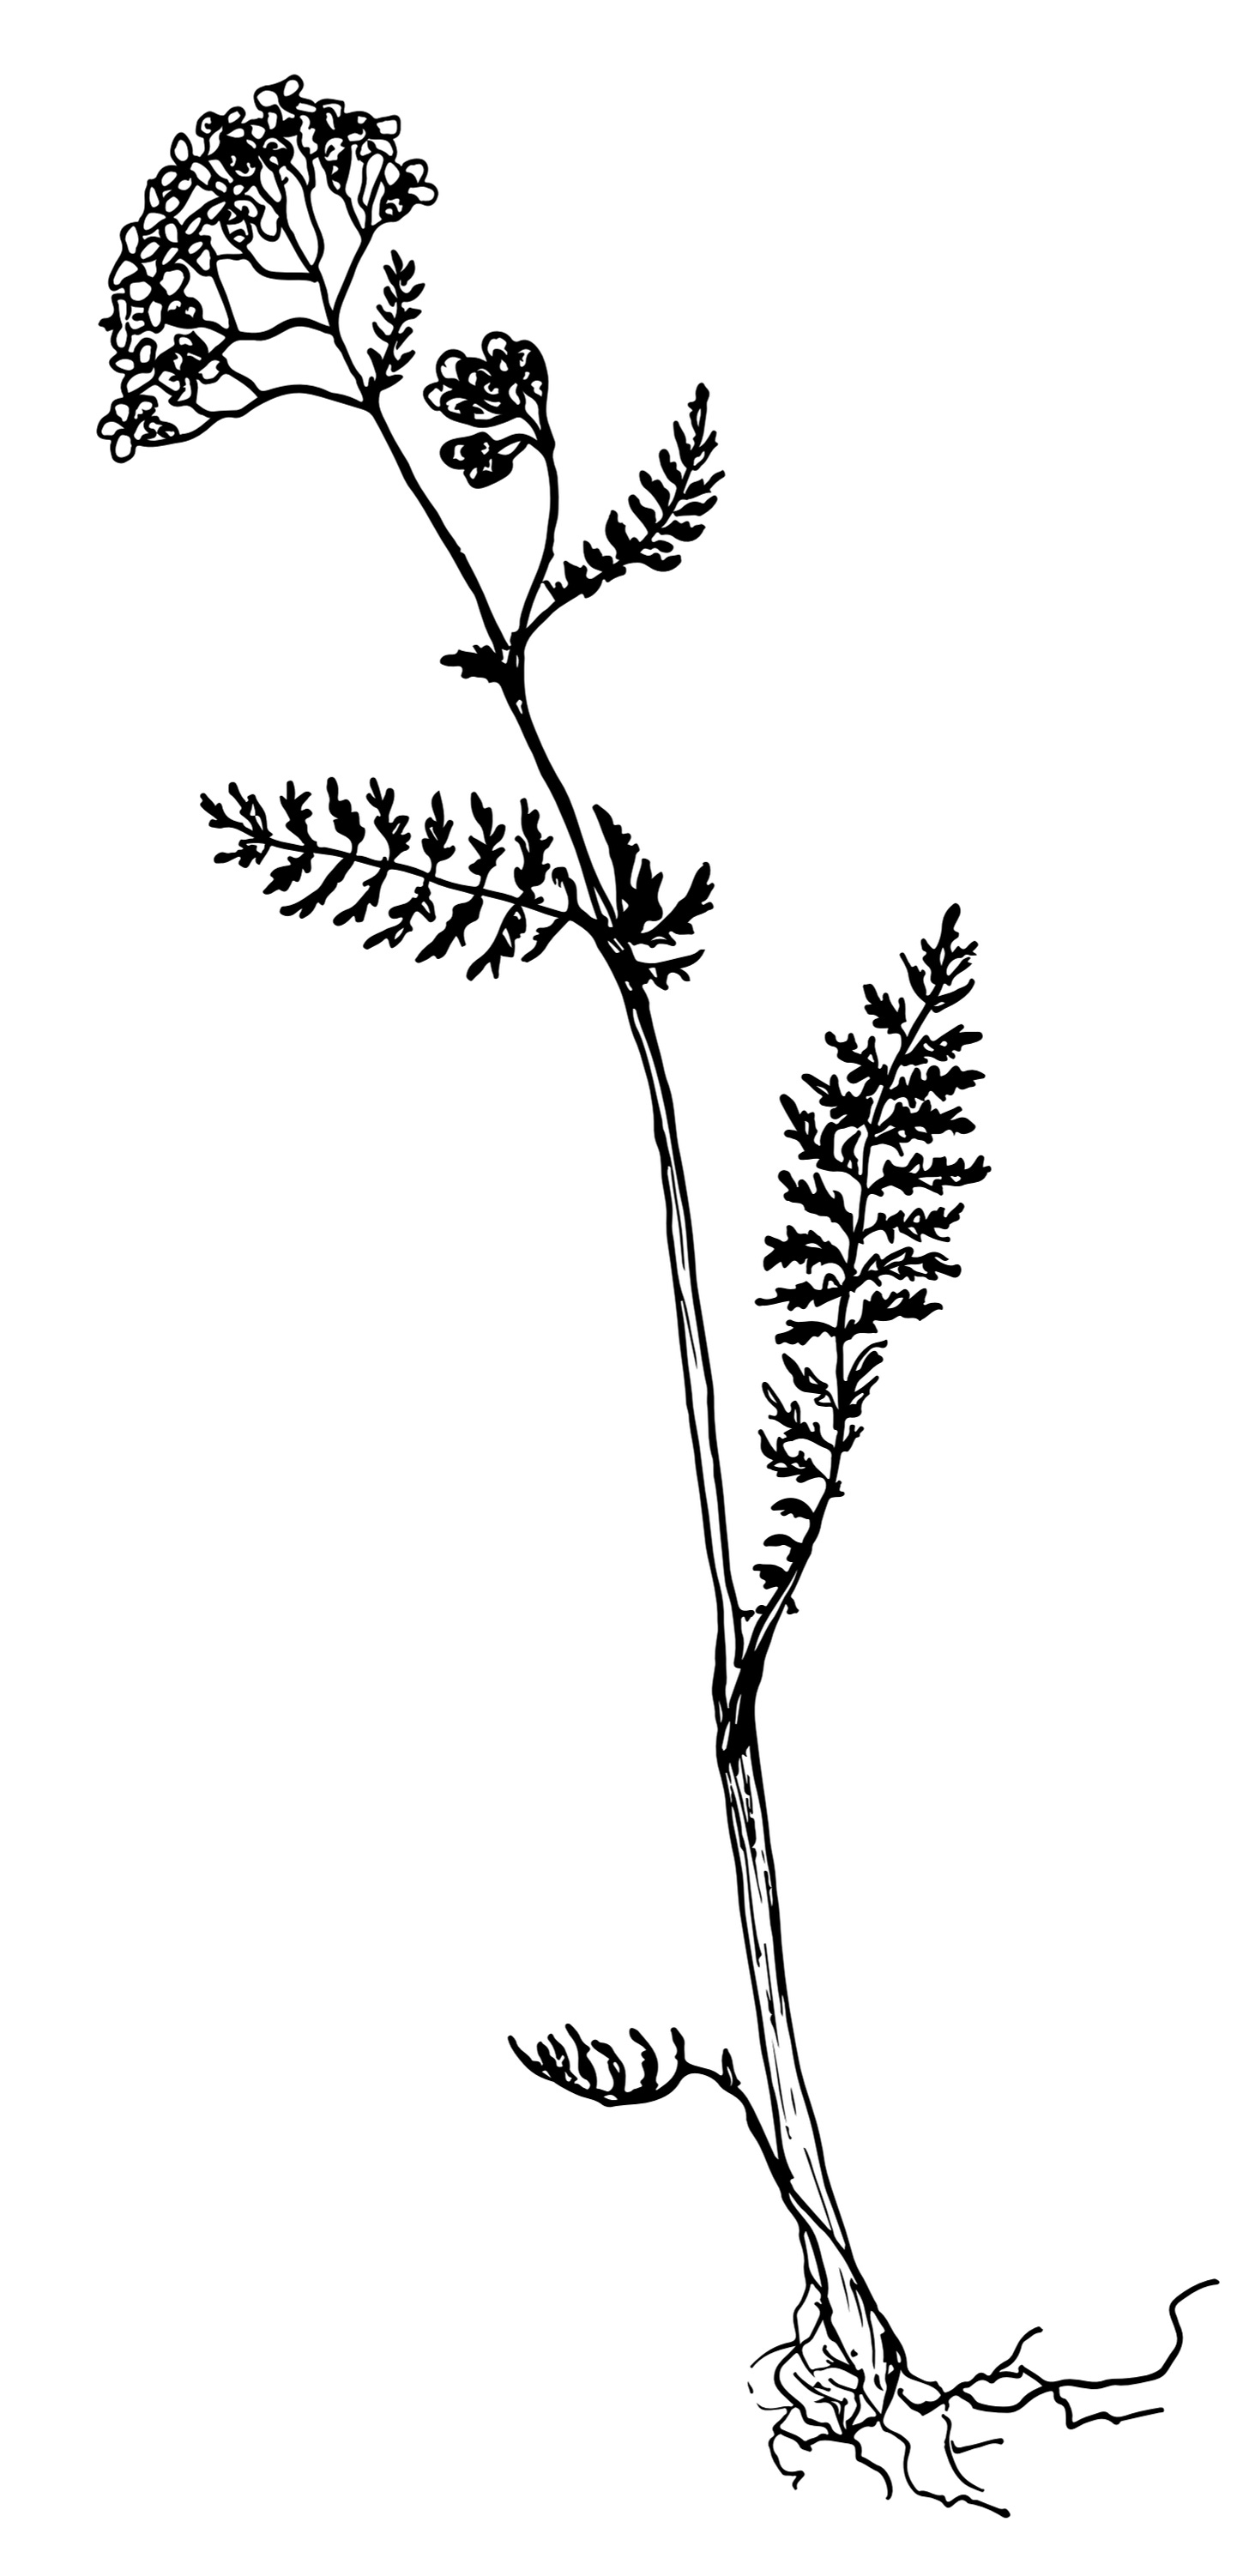 Achillea millefolium Yarrow. Hand drawn sketch botanical illustration.